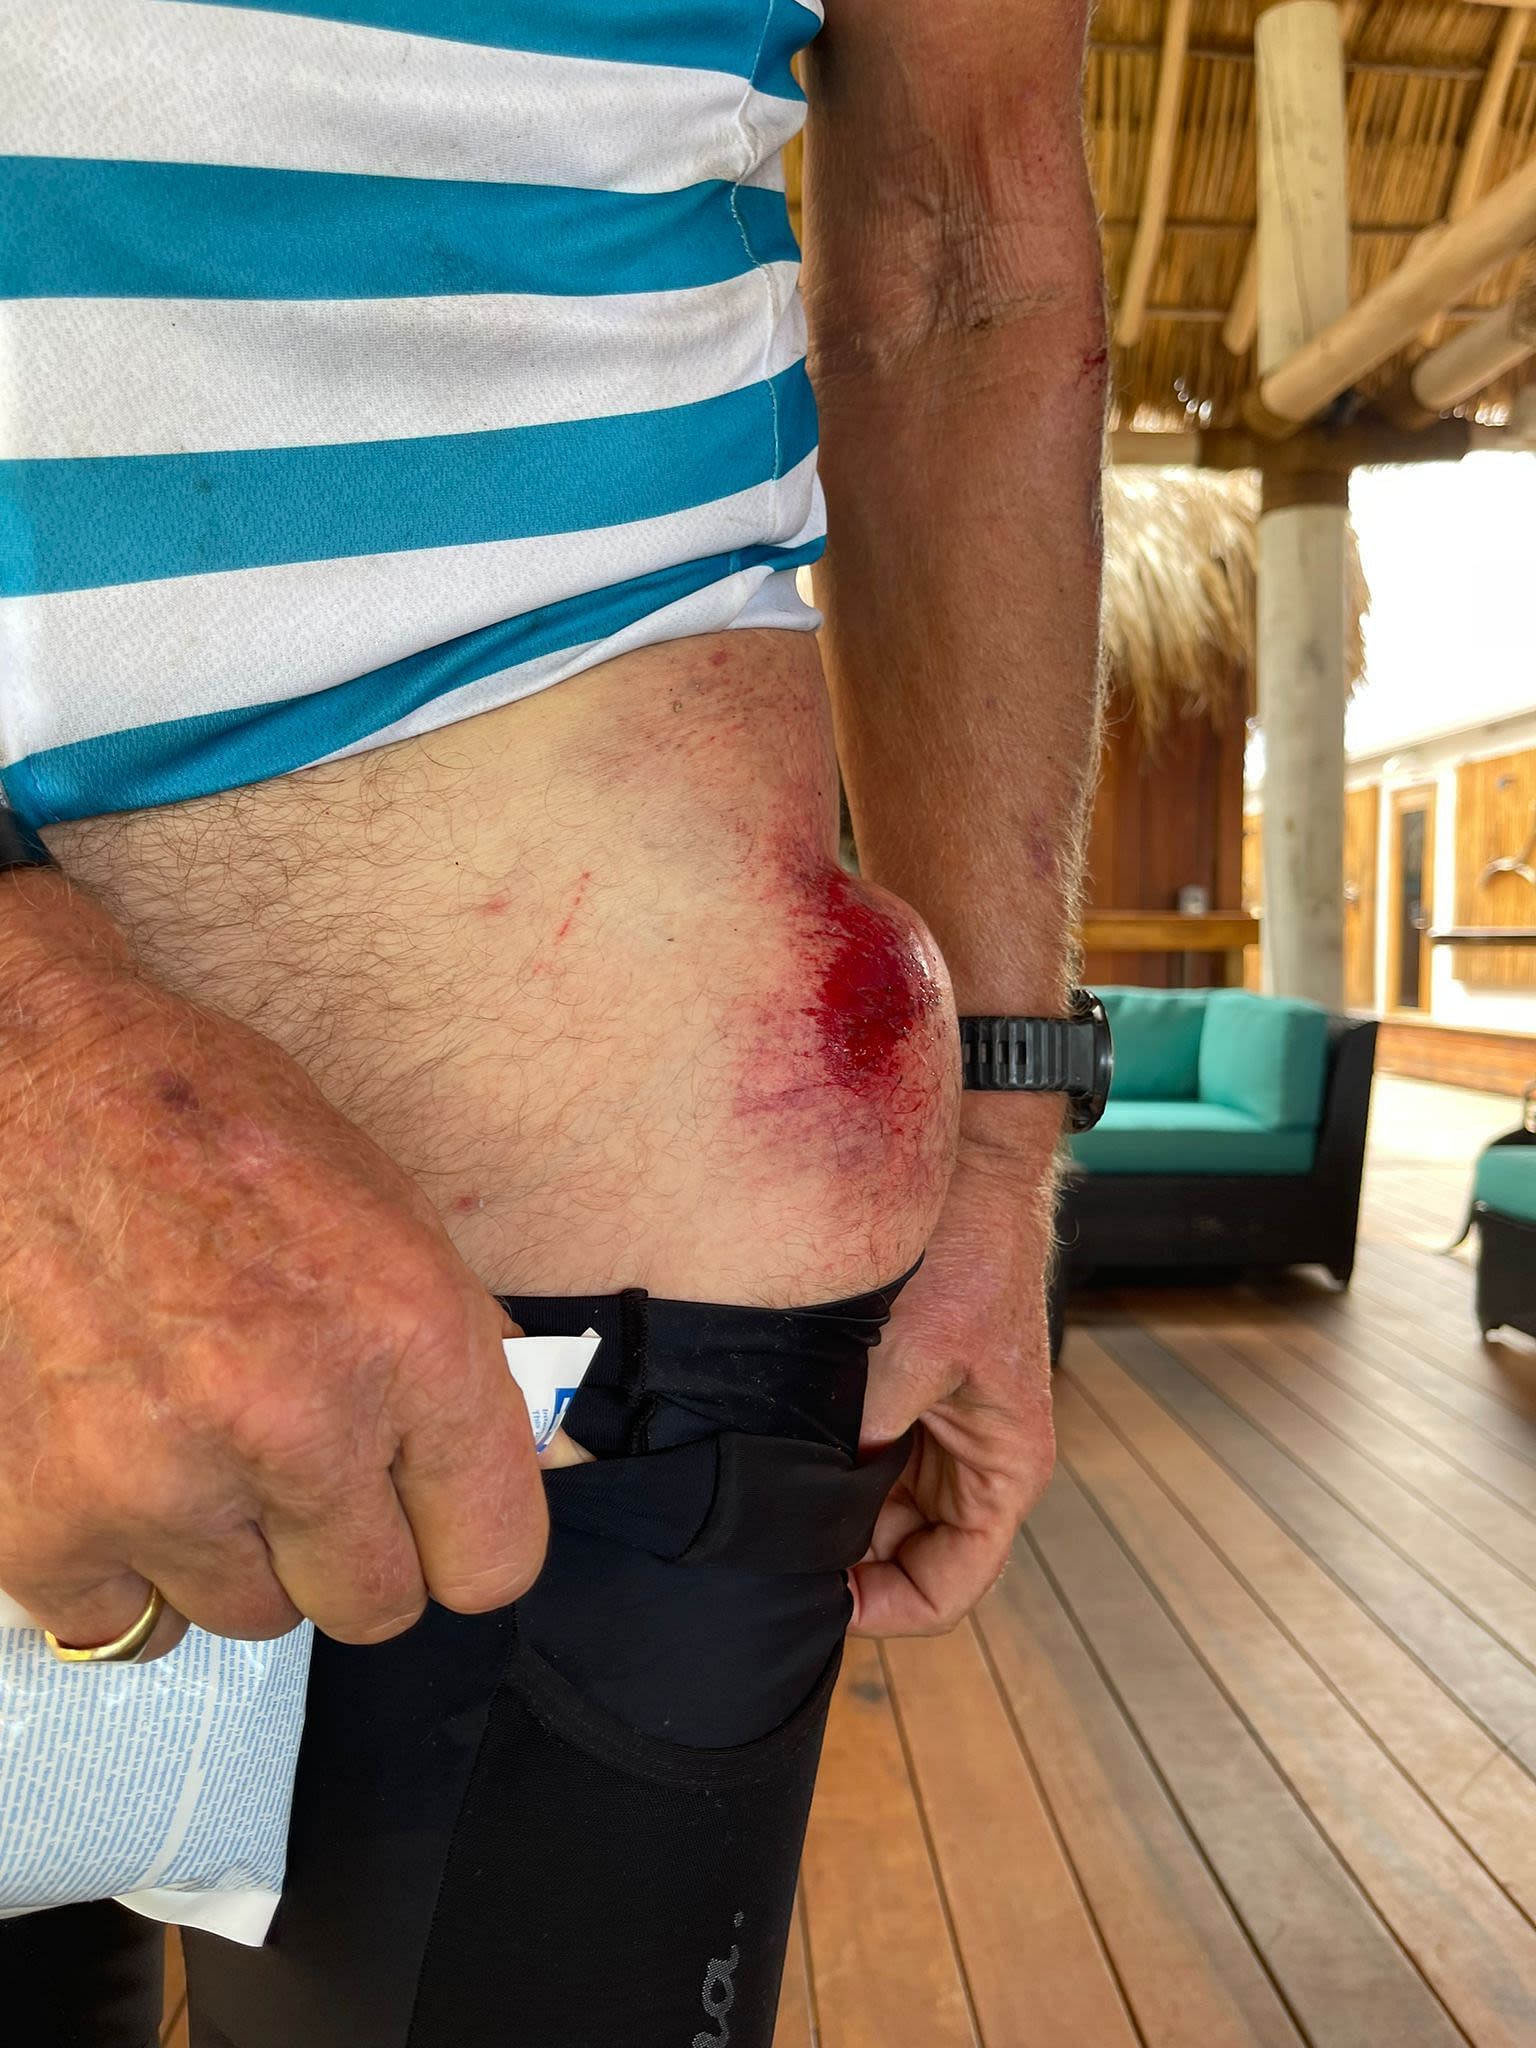 Richard Branson got a big bump on his hip after his bike crashed in 2021 (Image via Virgin Group website)